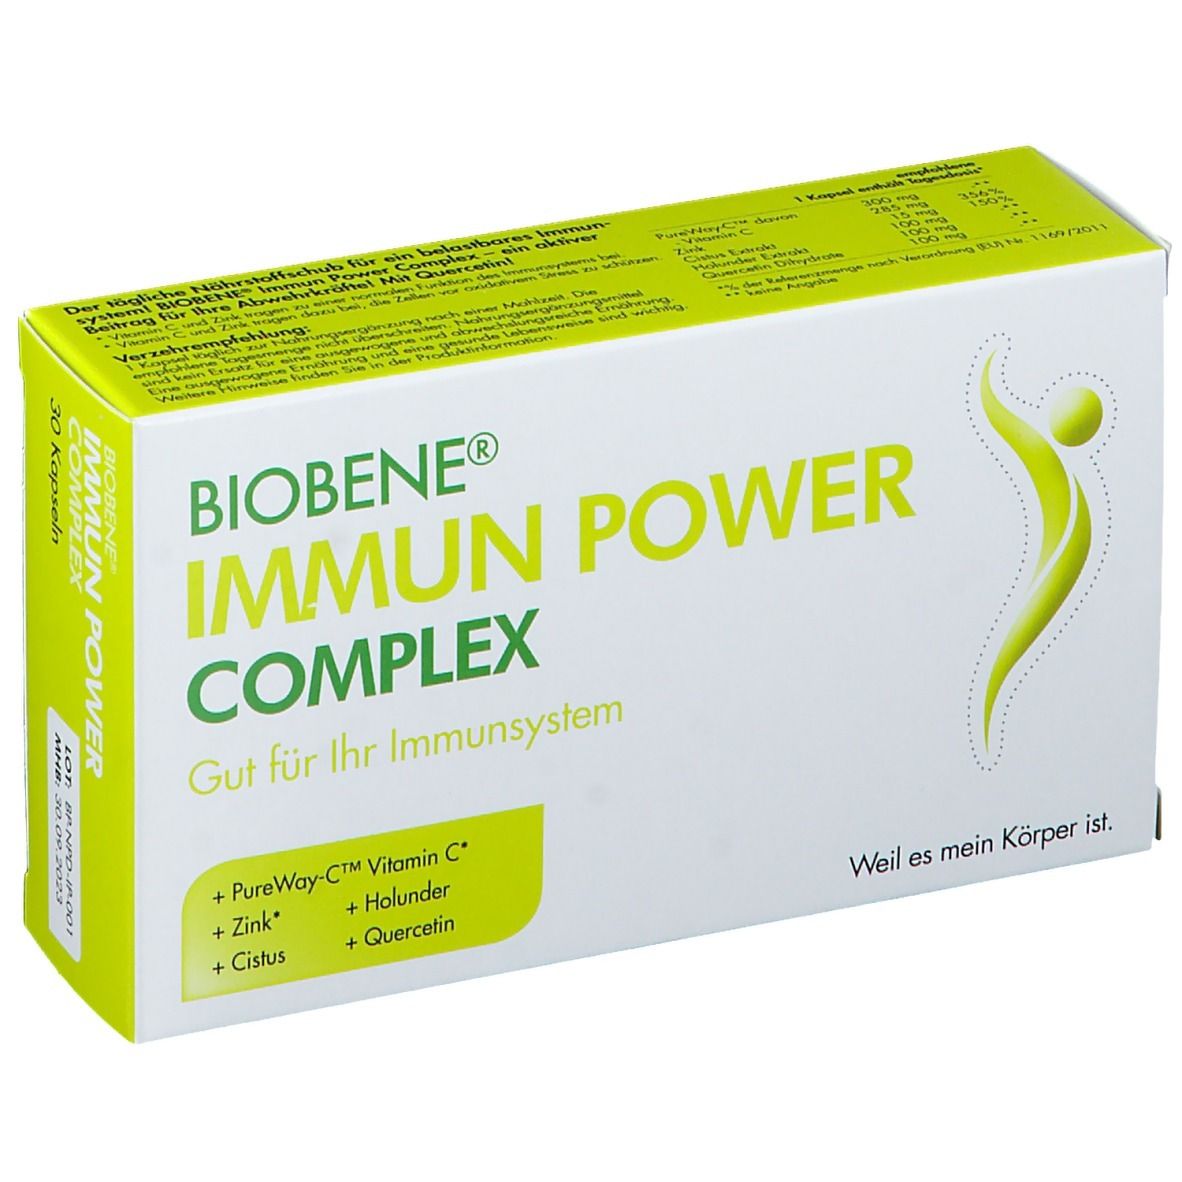 BIOBENE® Immun Power Complex